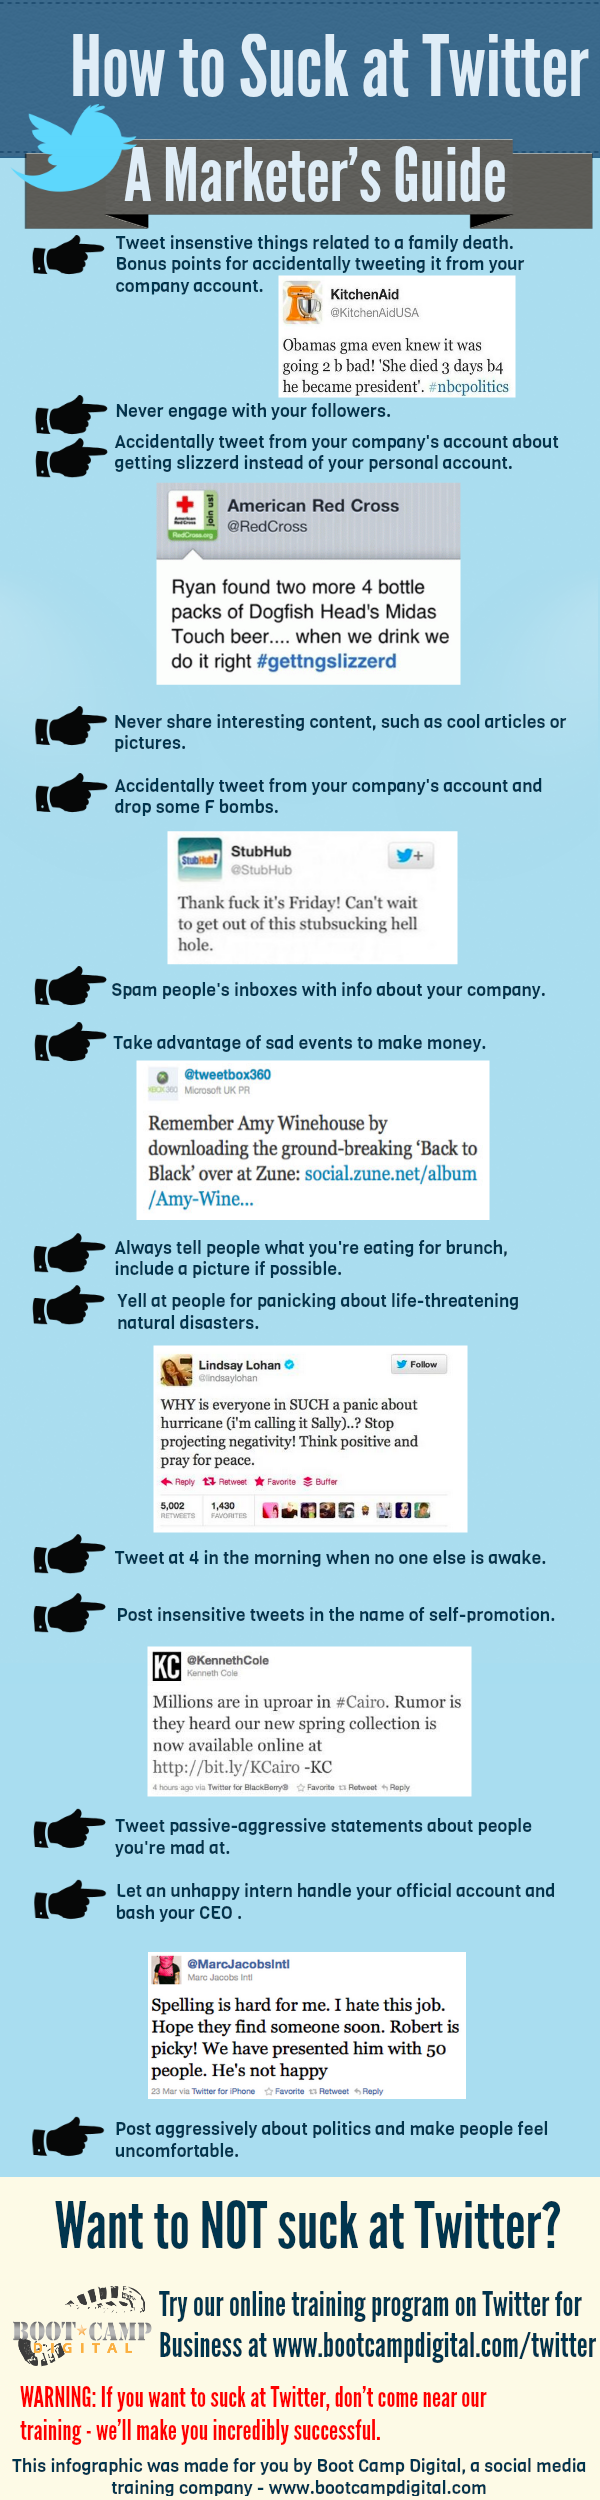 Twitter-Marketing-Infographic